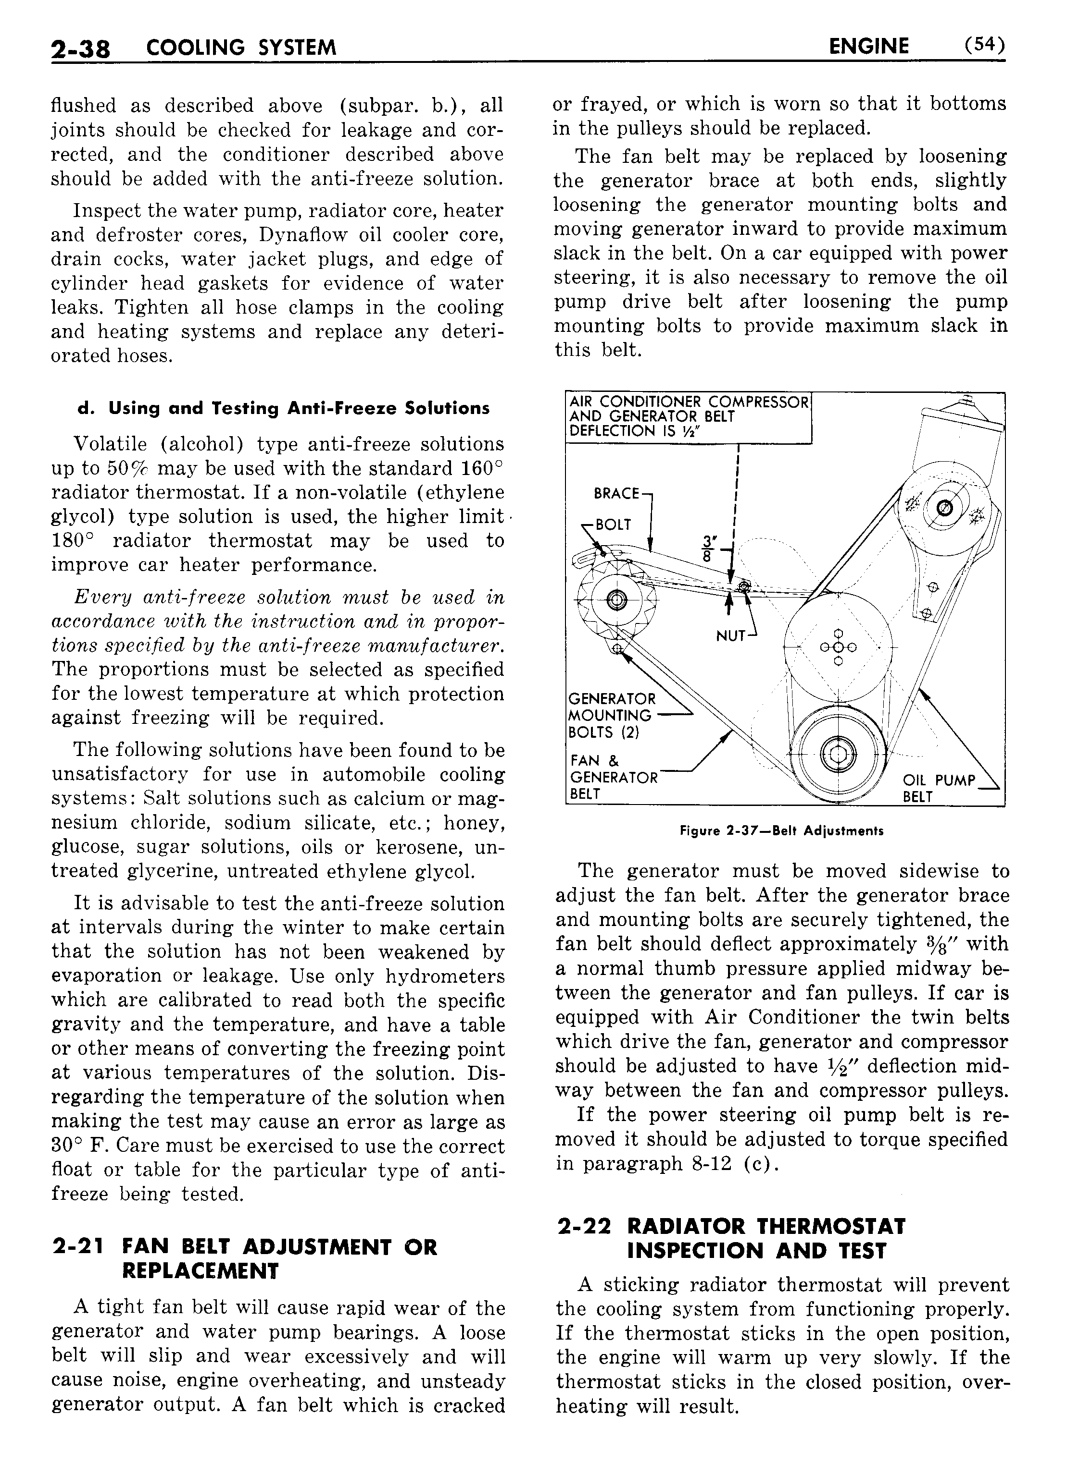 n_03 1956 Buick Shop Manual - Engine-038-038.jpg